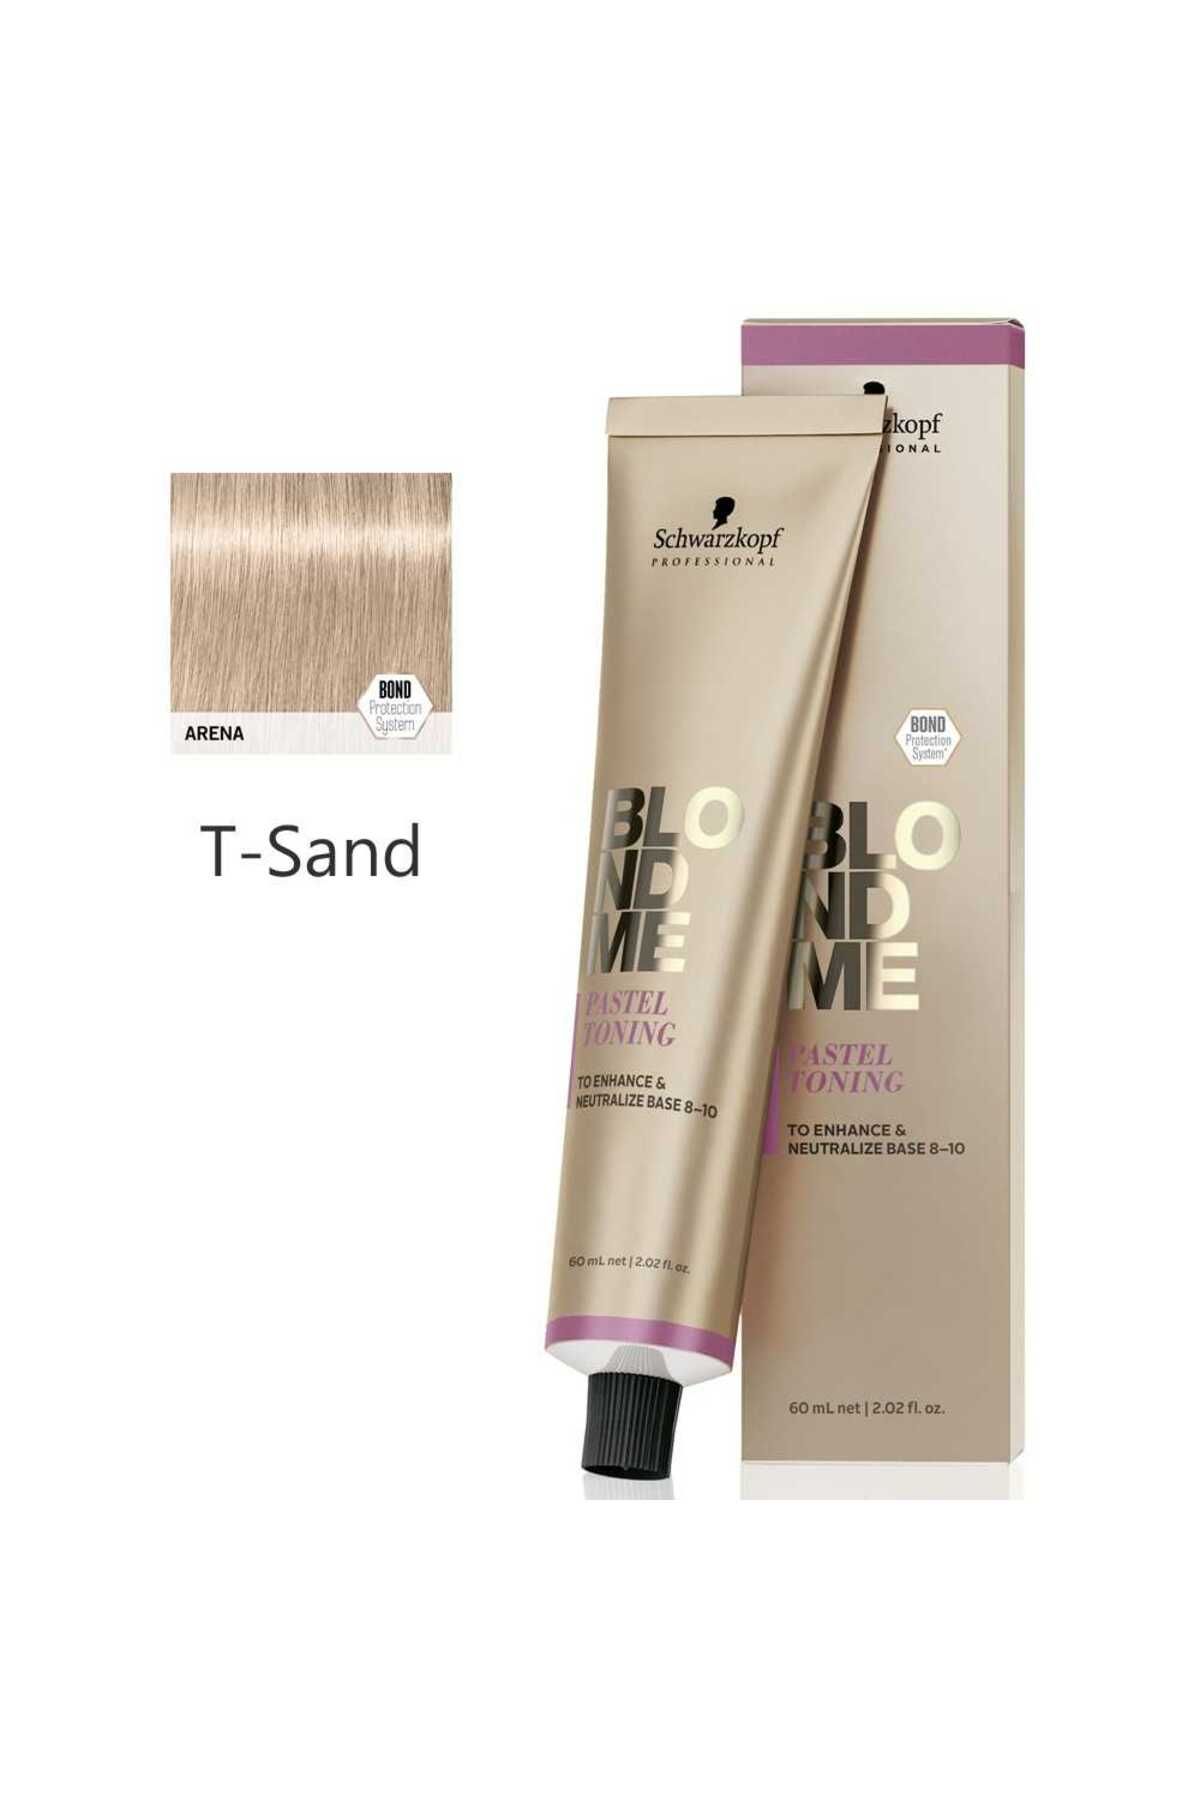 BLONDME Schwarzkopf BLONDME Pastel Toning Tonlama İçin Krem Boya 60ml T - Sand (Kum)